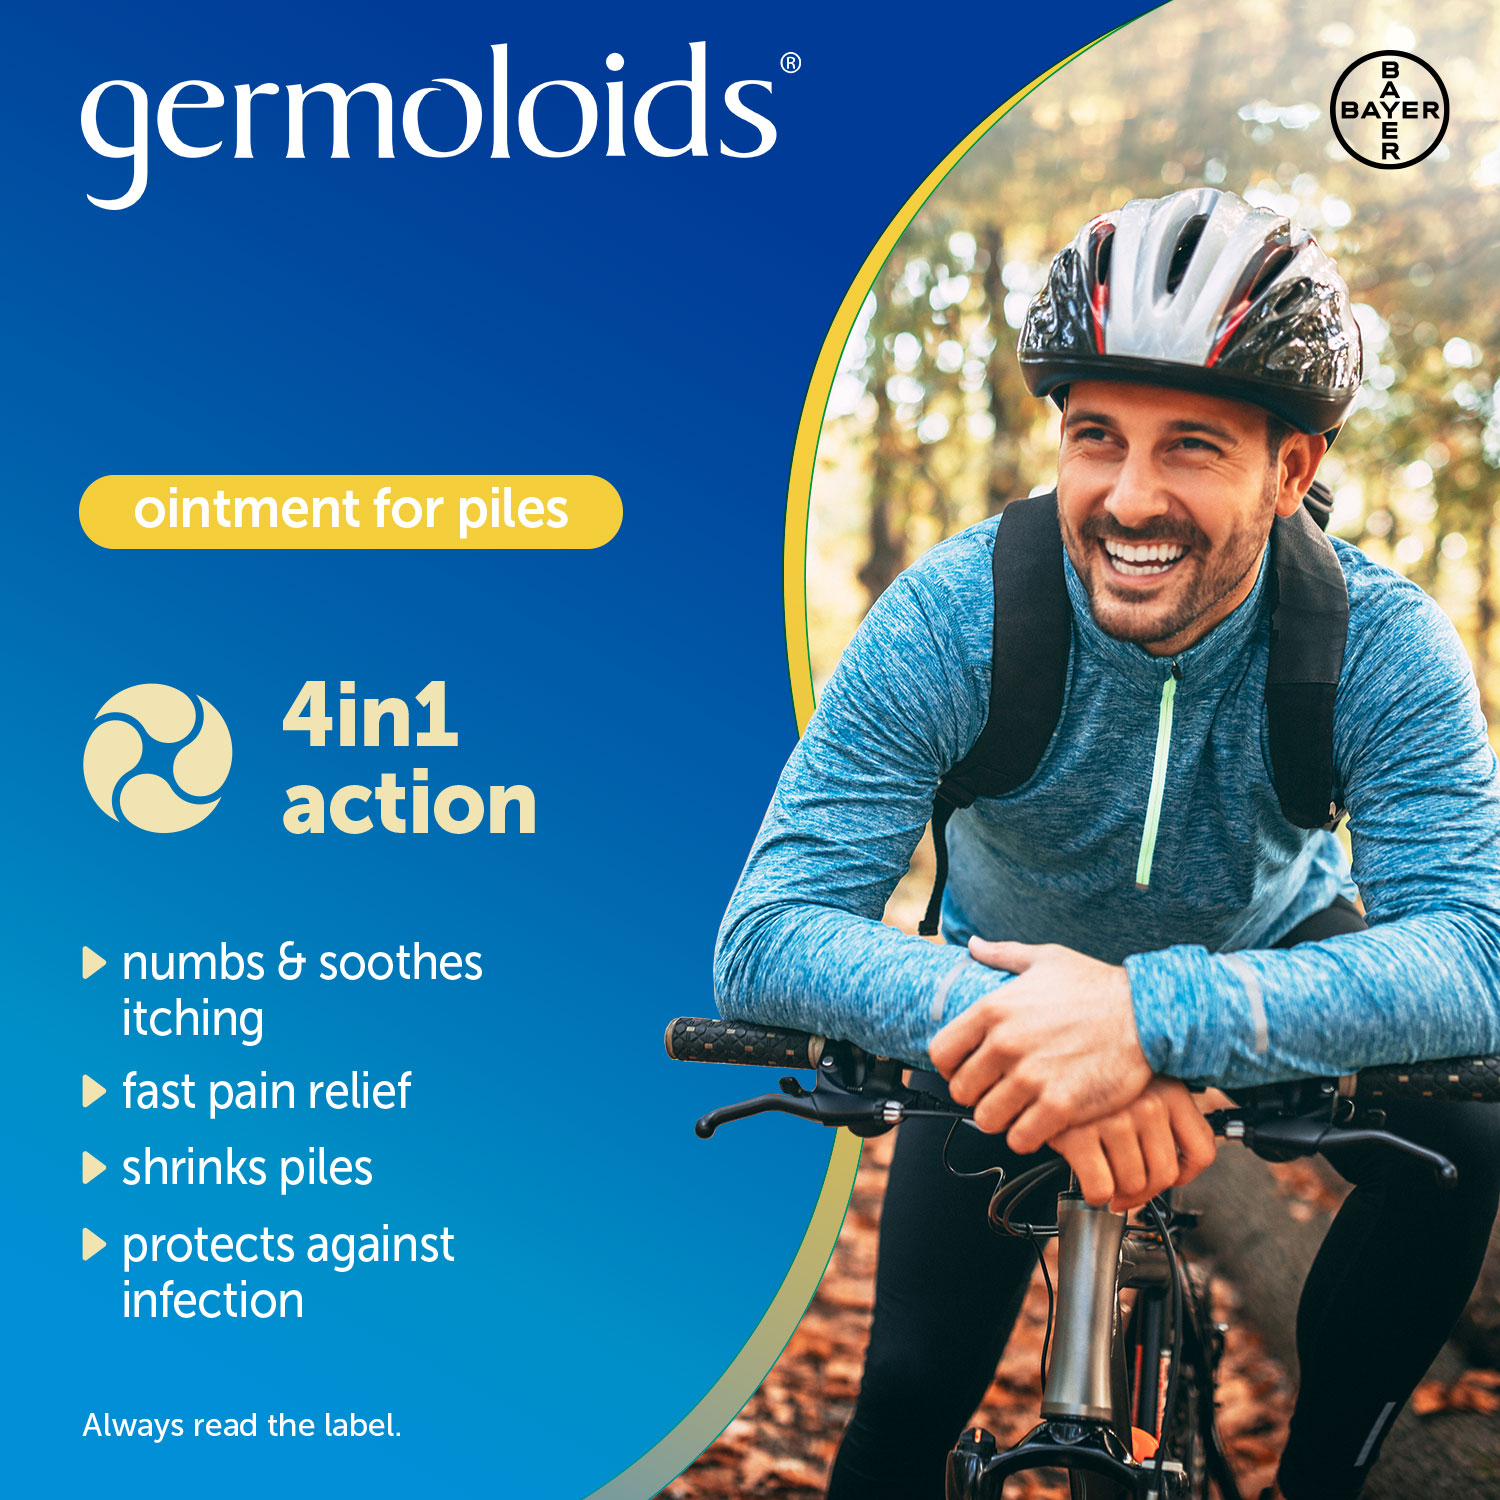 Germoloids Haemorrhoids Piles Treatment & Piles Suppositories Cream  Ointment